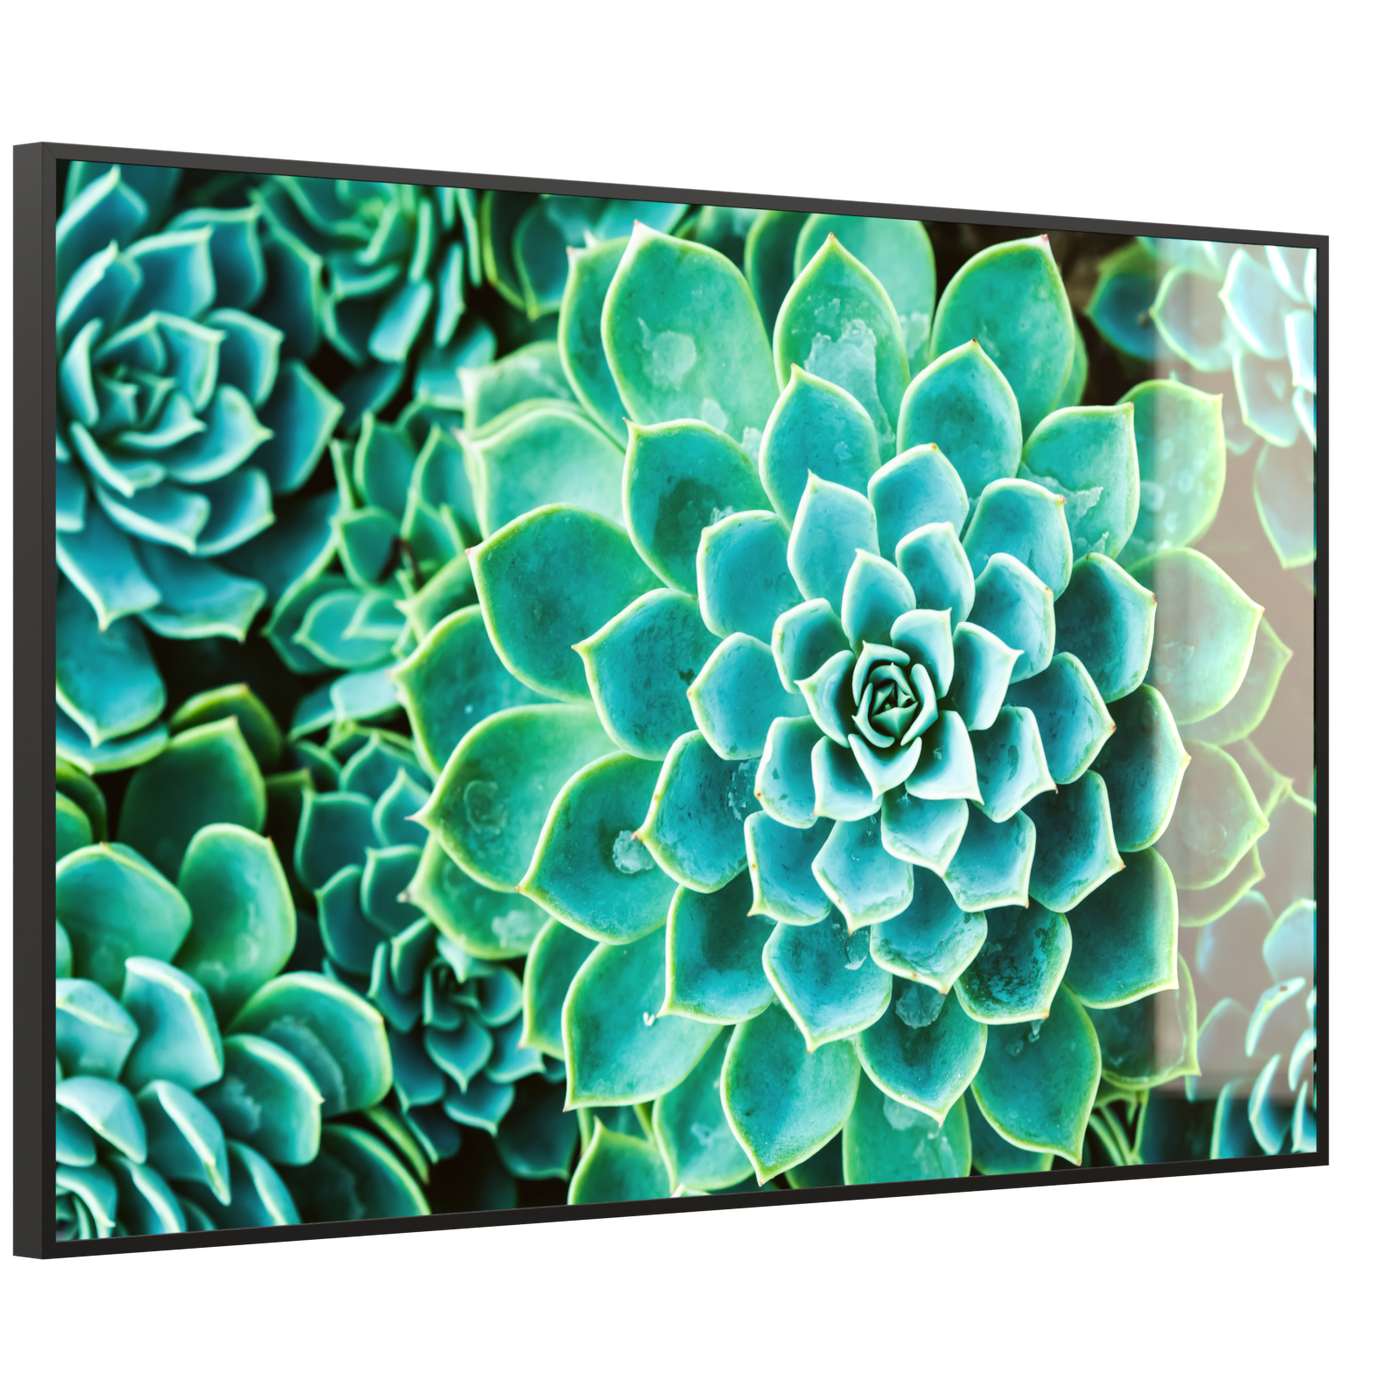 STEINFELD Deko Glas Wandbild Motiv 036 Kaktus in Queen